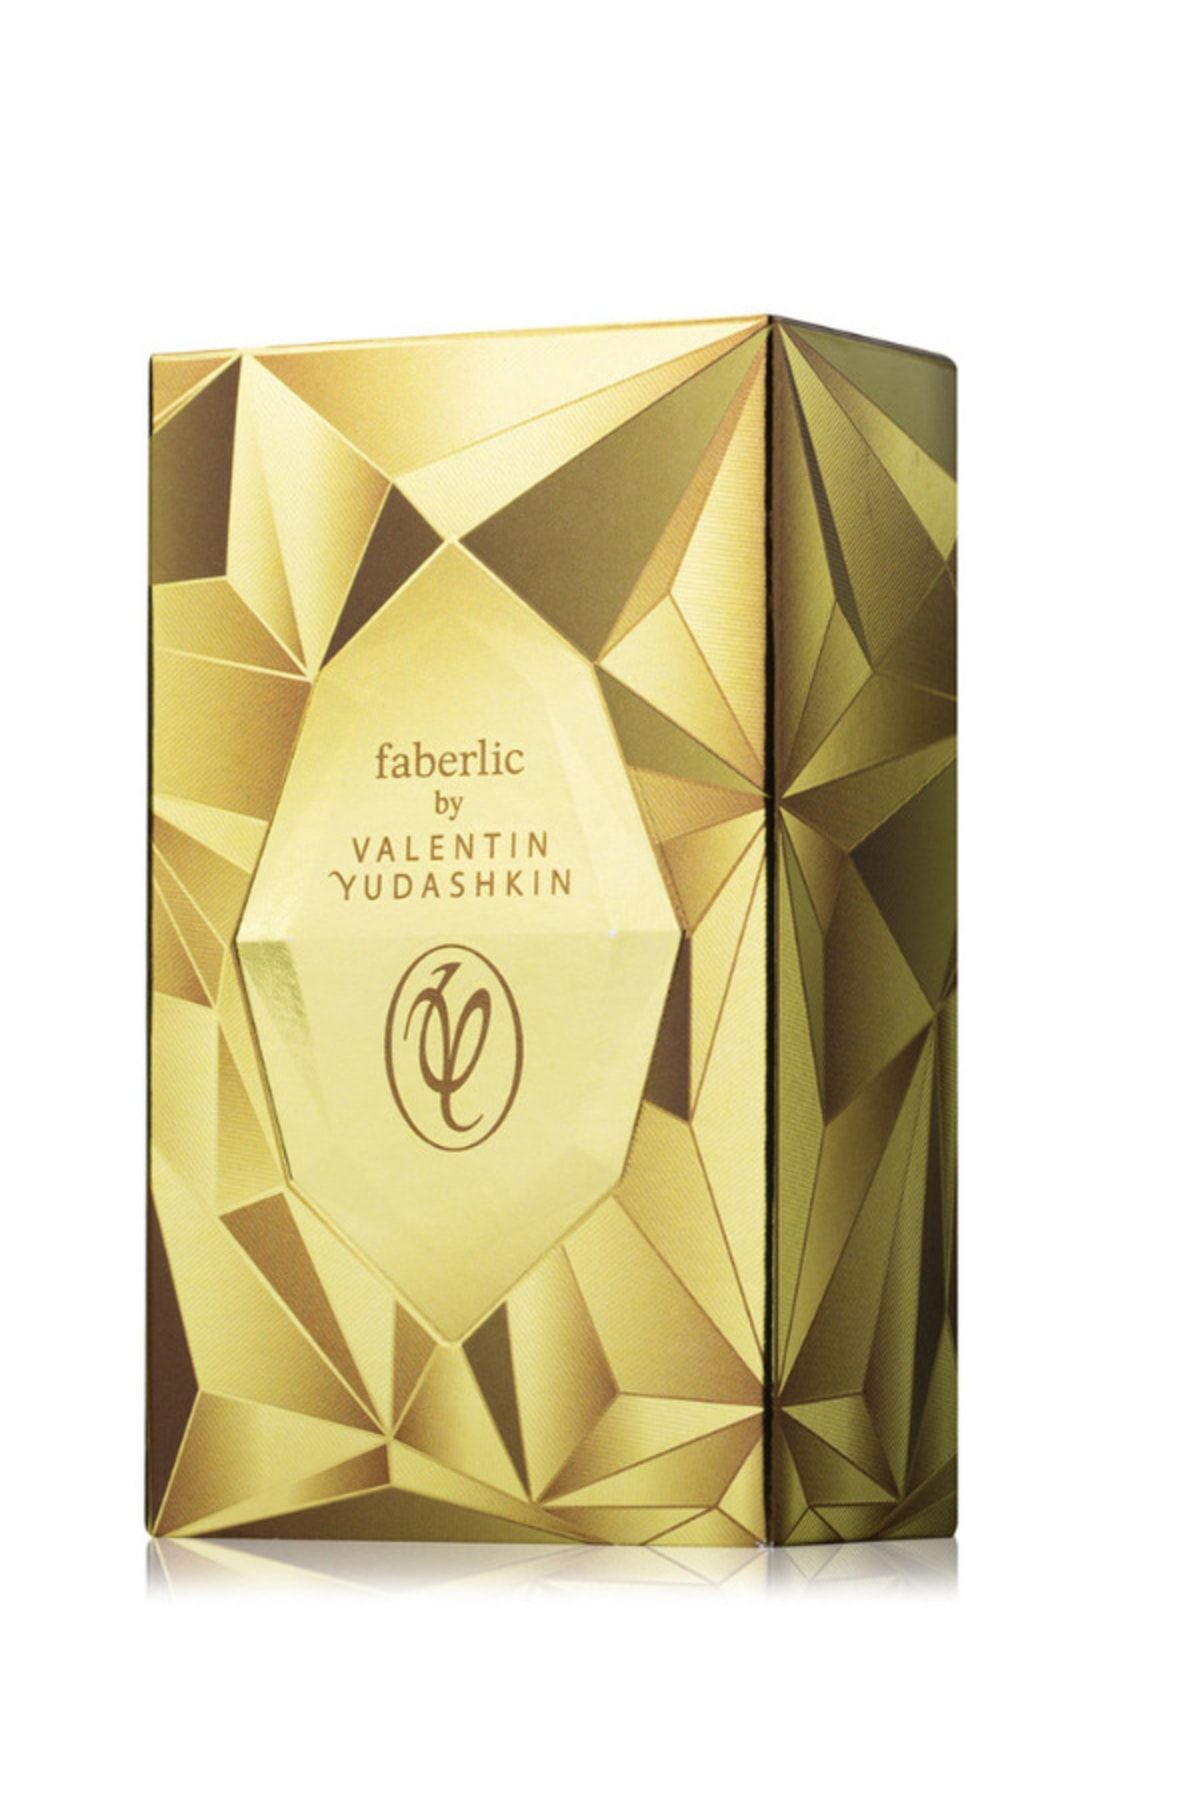 Faberlic توسط Valentın Yudashkın Gold ادوپرفیوم 65 ml عطر زنانه